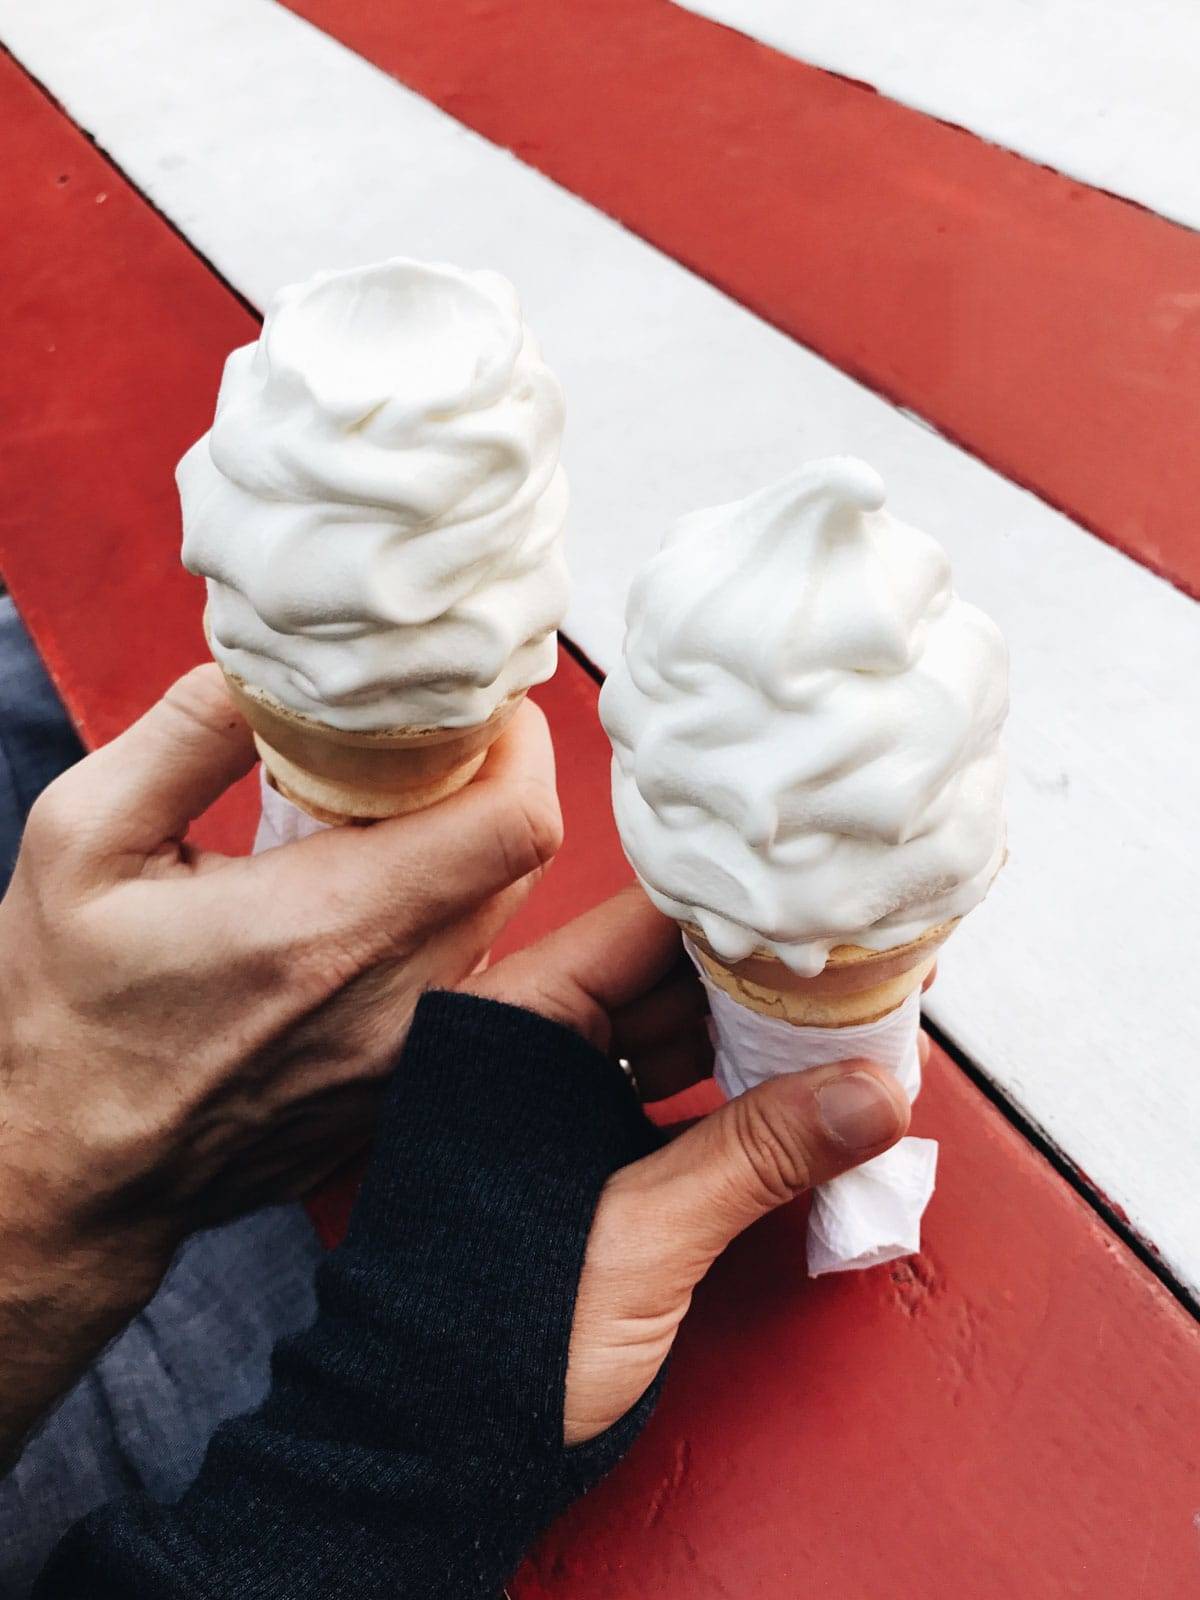 Two vanilla ice creams in a cone